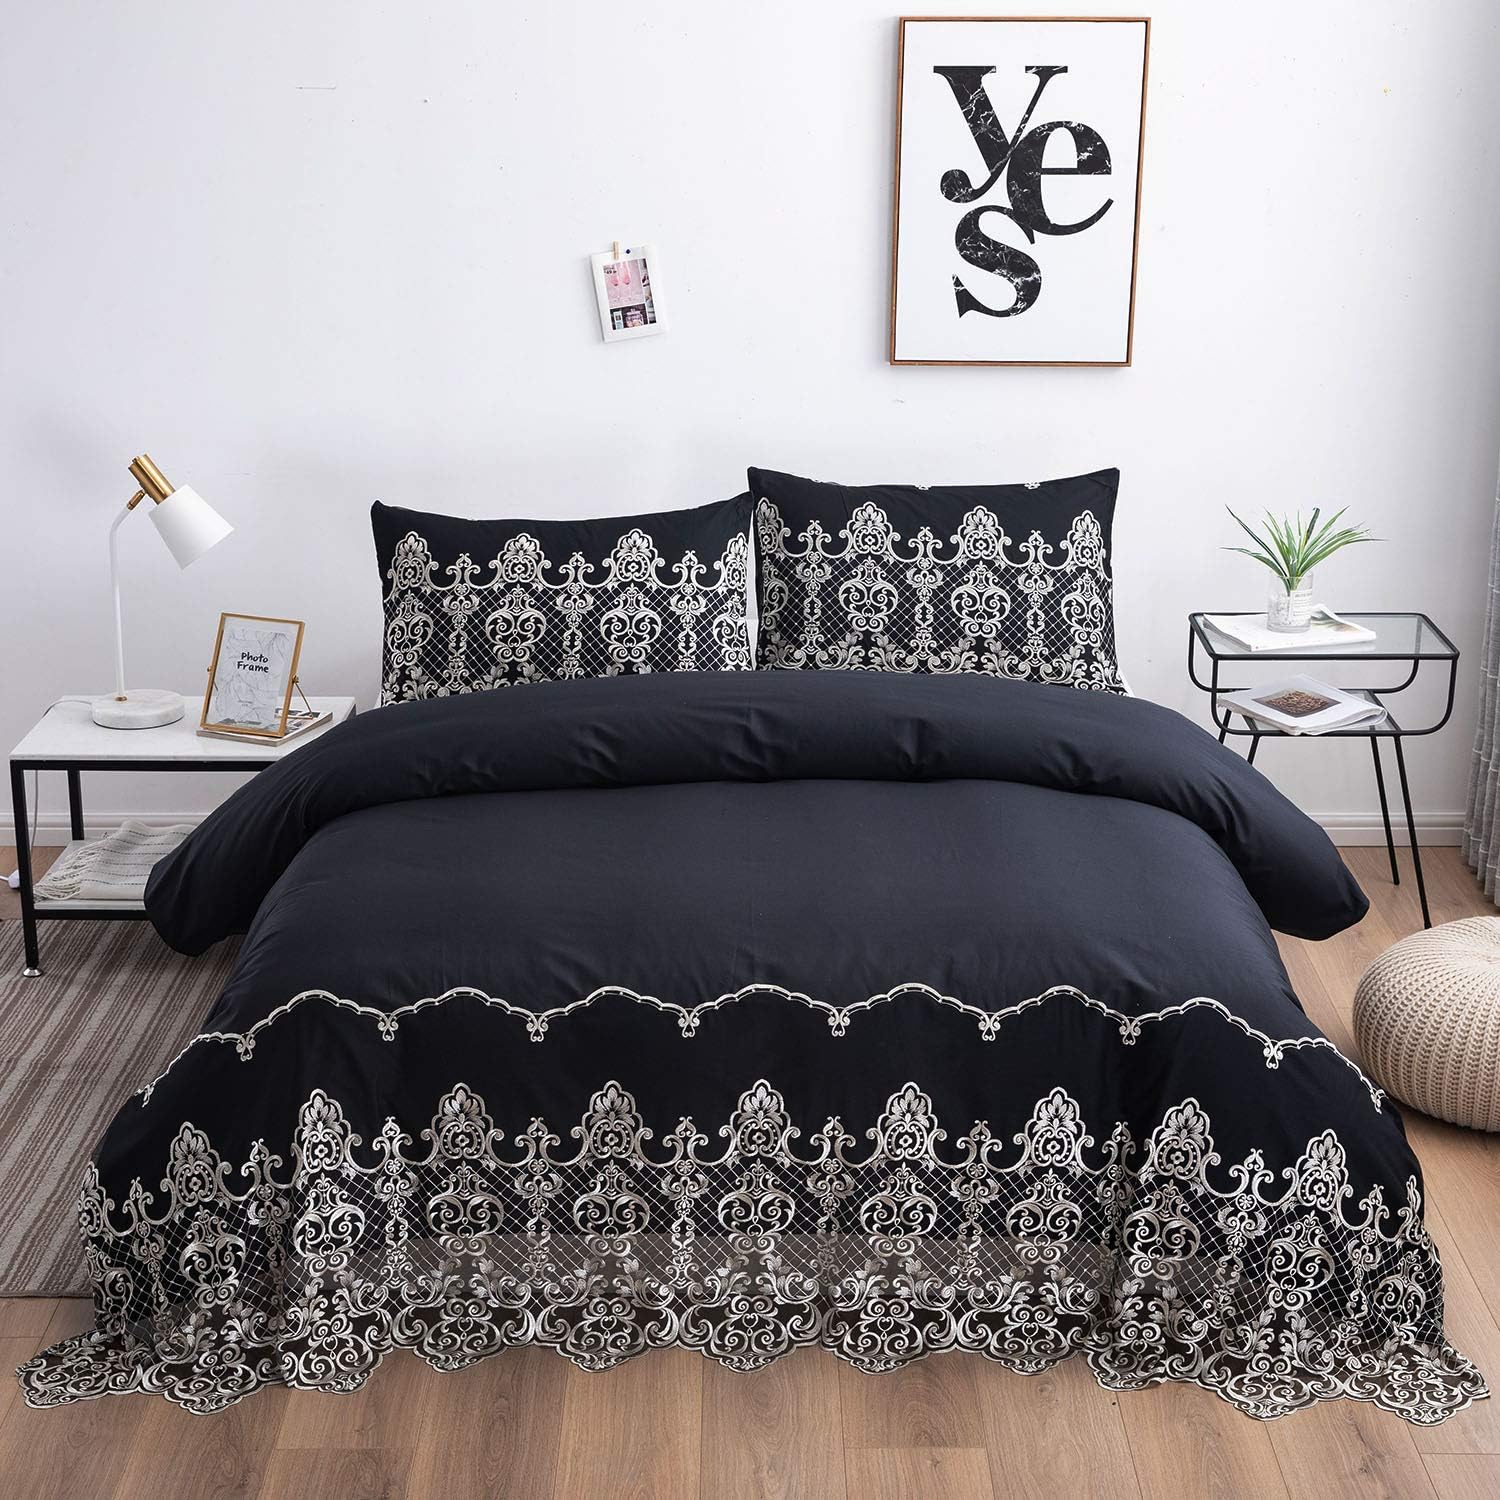 FADFAY Embroidered Duvet Cover Sets Shabby Chic Lace Bedding 100% Cotton Boho Bedding Sets Elegant Comforter Cover Set Designer Bedding (3Pcs, Black, Twin)